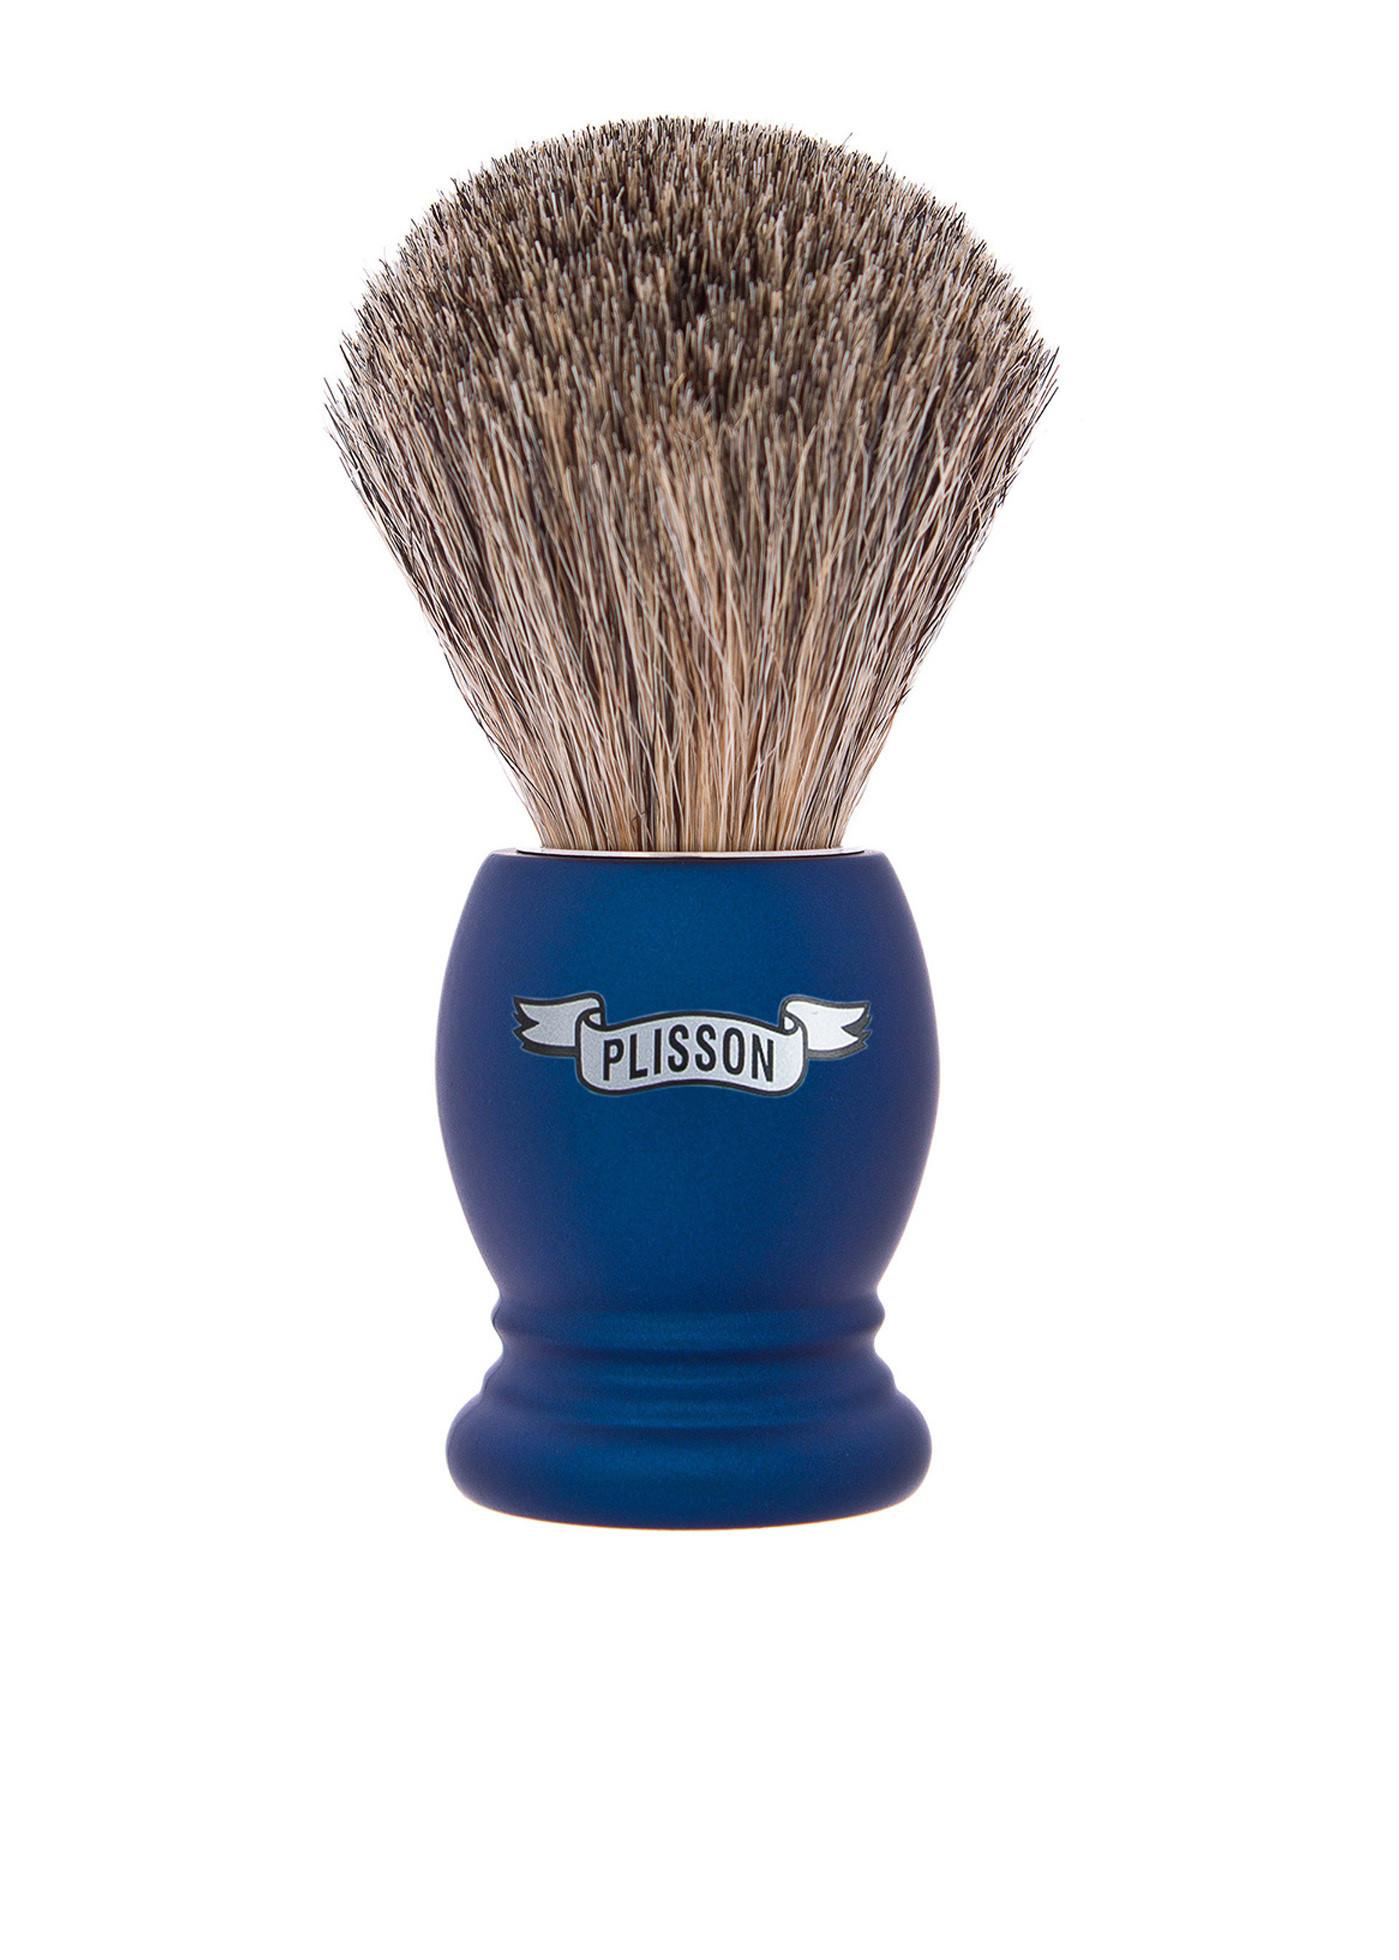 Plisson 1808  Rasierset Night Blue & Russian grey shaving brush 